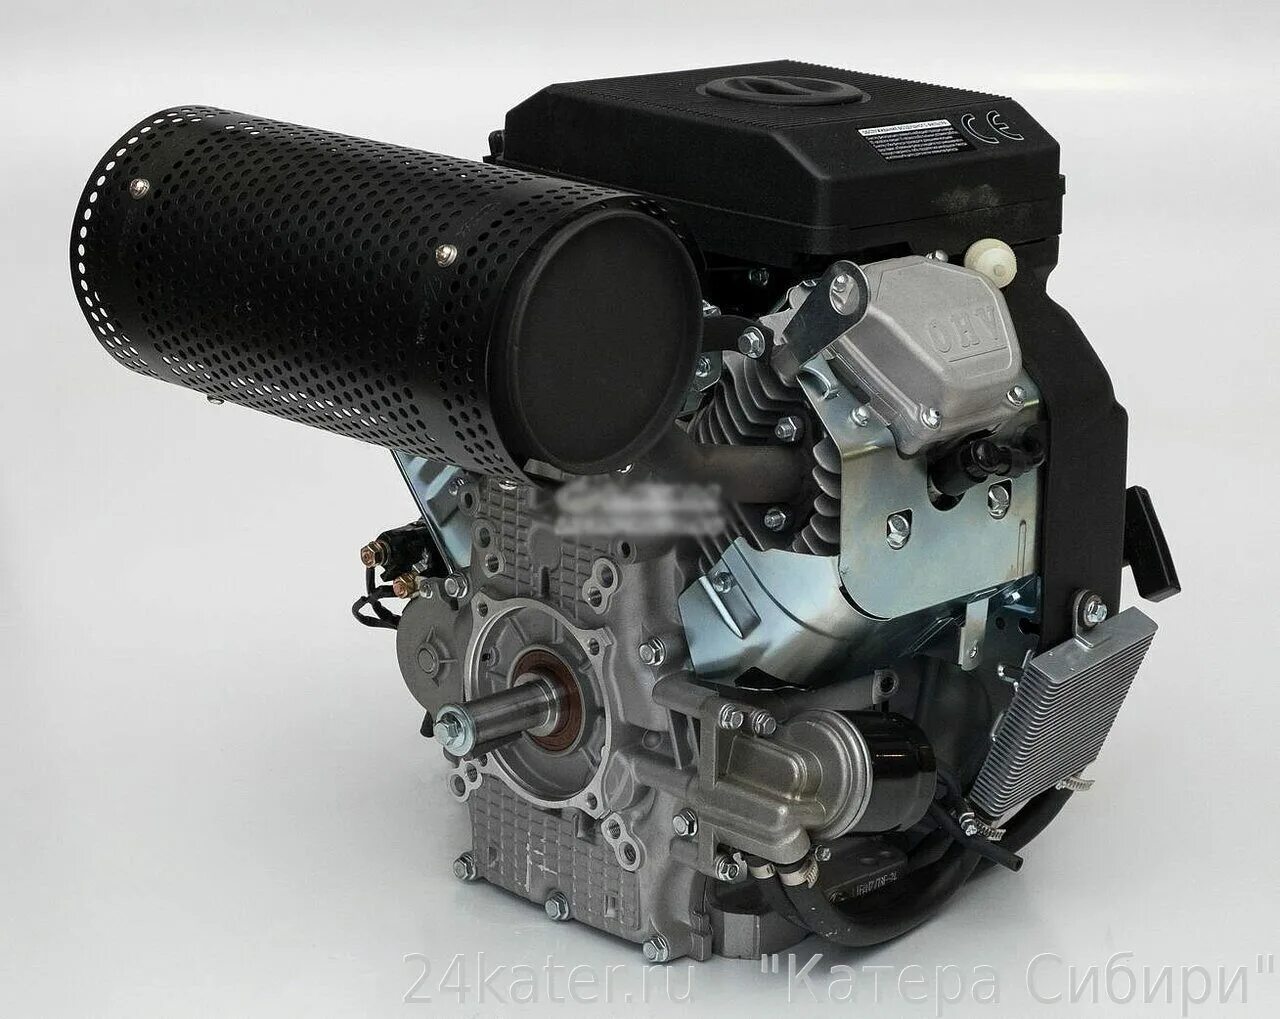 Двигатель Lifan lf2v78f-2a Pro. Двигатель Lifan lf2v78f-2a (27 л.с.). Двигатель Lifan lf2v78f-2a. Двигатель Lifan lf2v78f-2a (00605). Лифан 27 л с купить